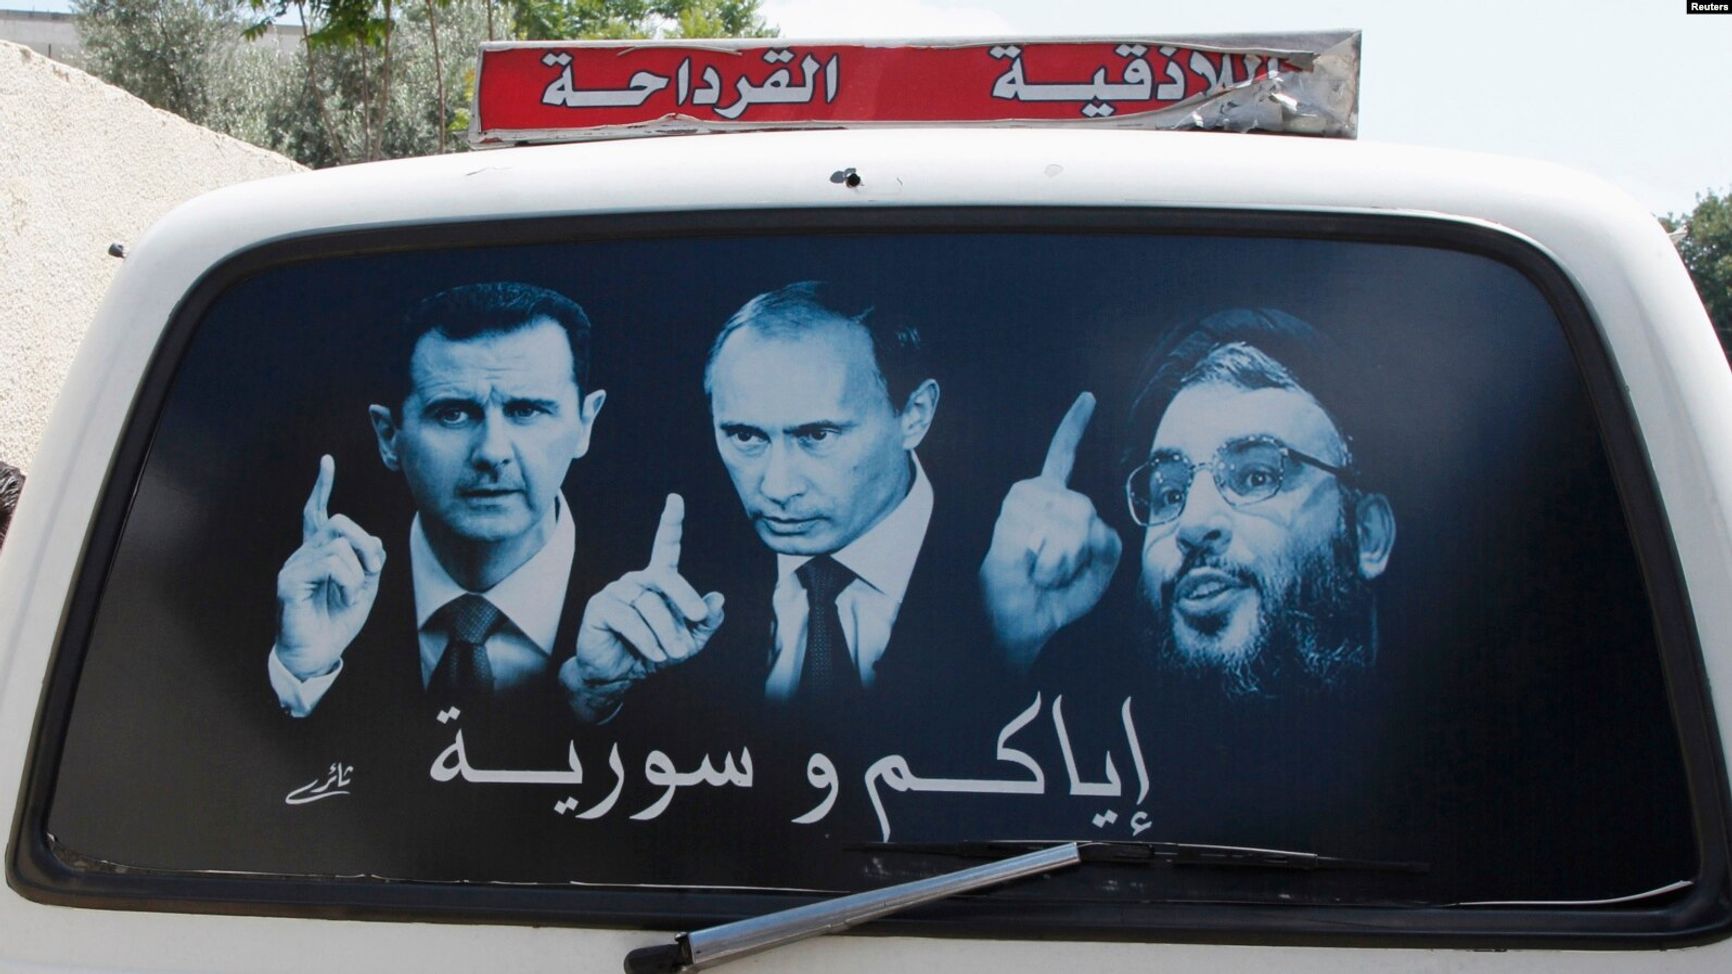 Рисунок на машине, на котором изображены президент Сирии Башар Асад, президент РФ Владимир Путин и лидер «Хезболлы» Сайед Насралла. Латакия, Сирия, май 2014 года